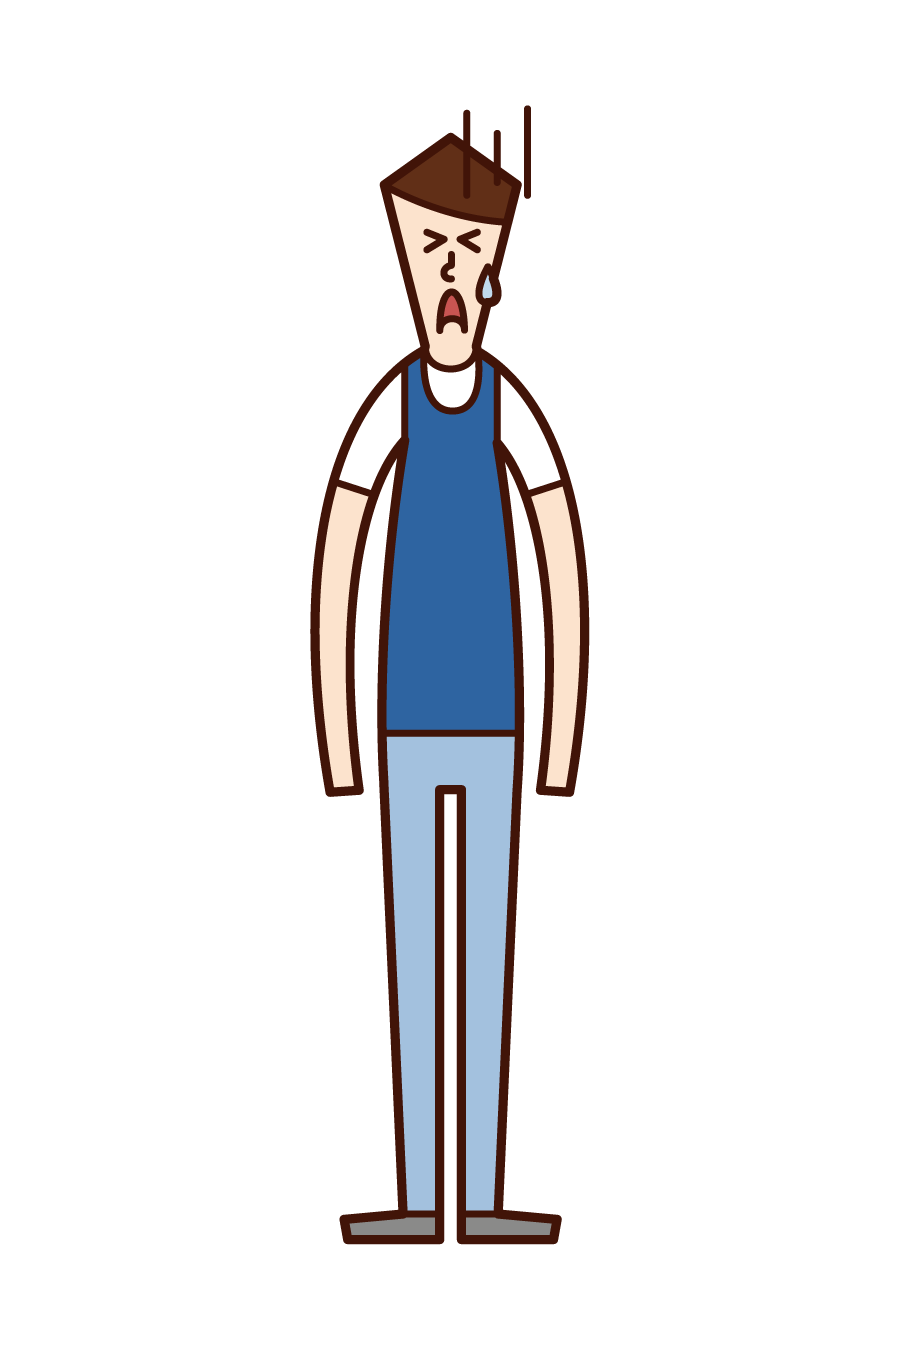 Illustration of a man wearing bibs